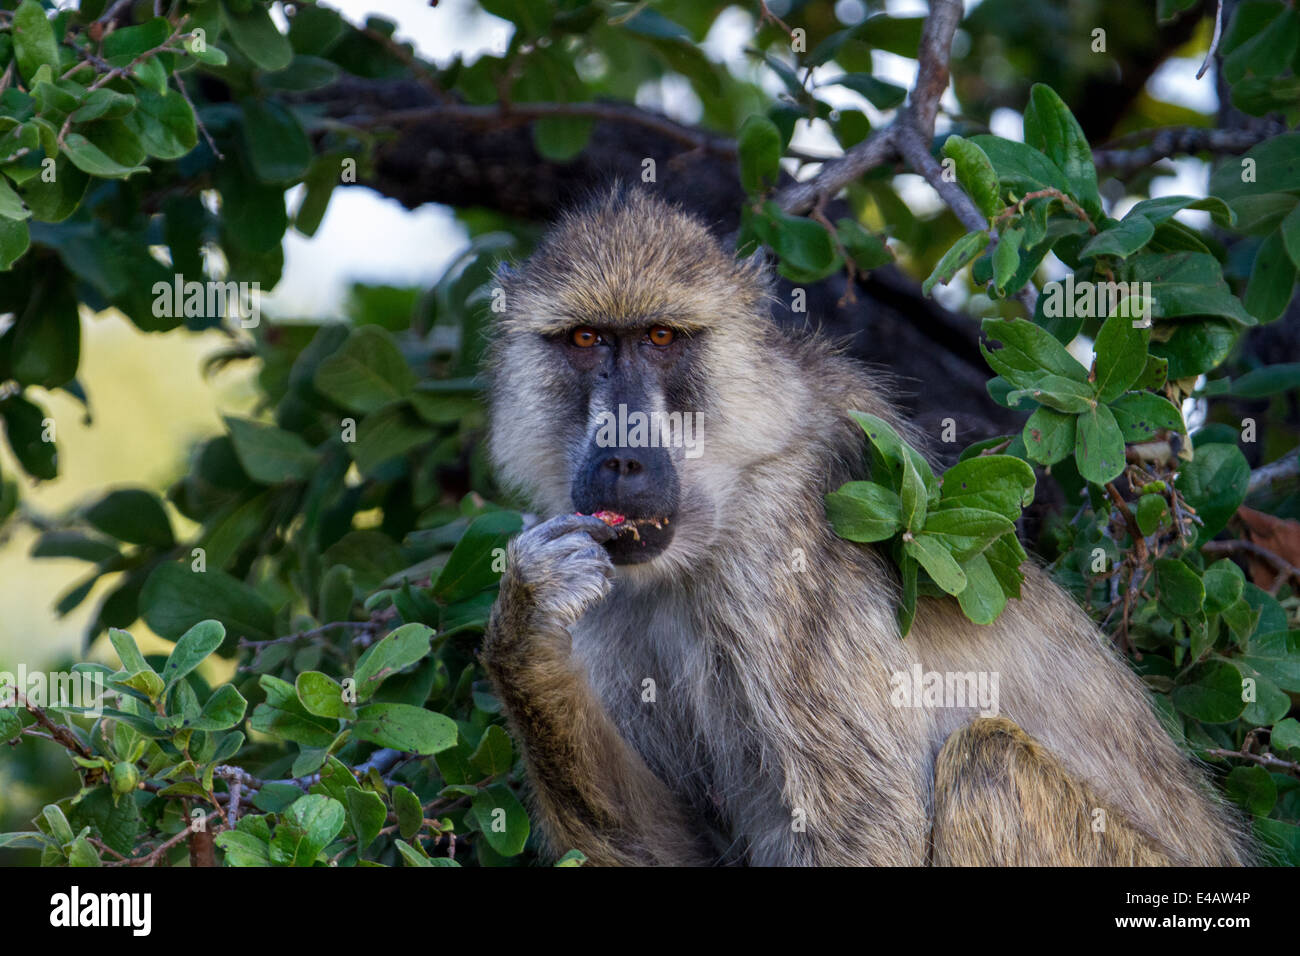 Baboon in a tree, Tanzania Stock Photo